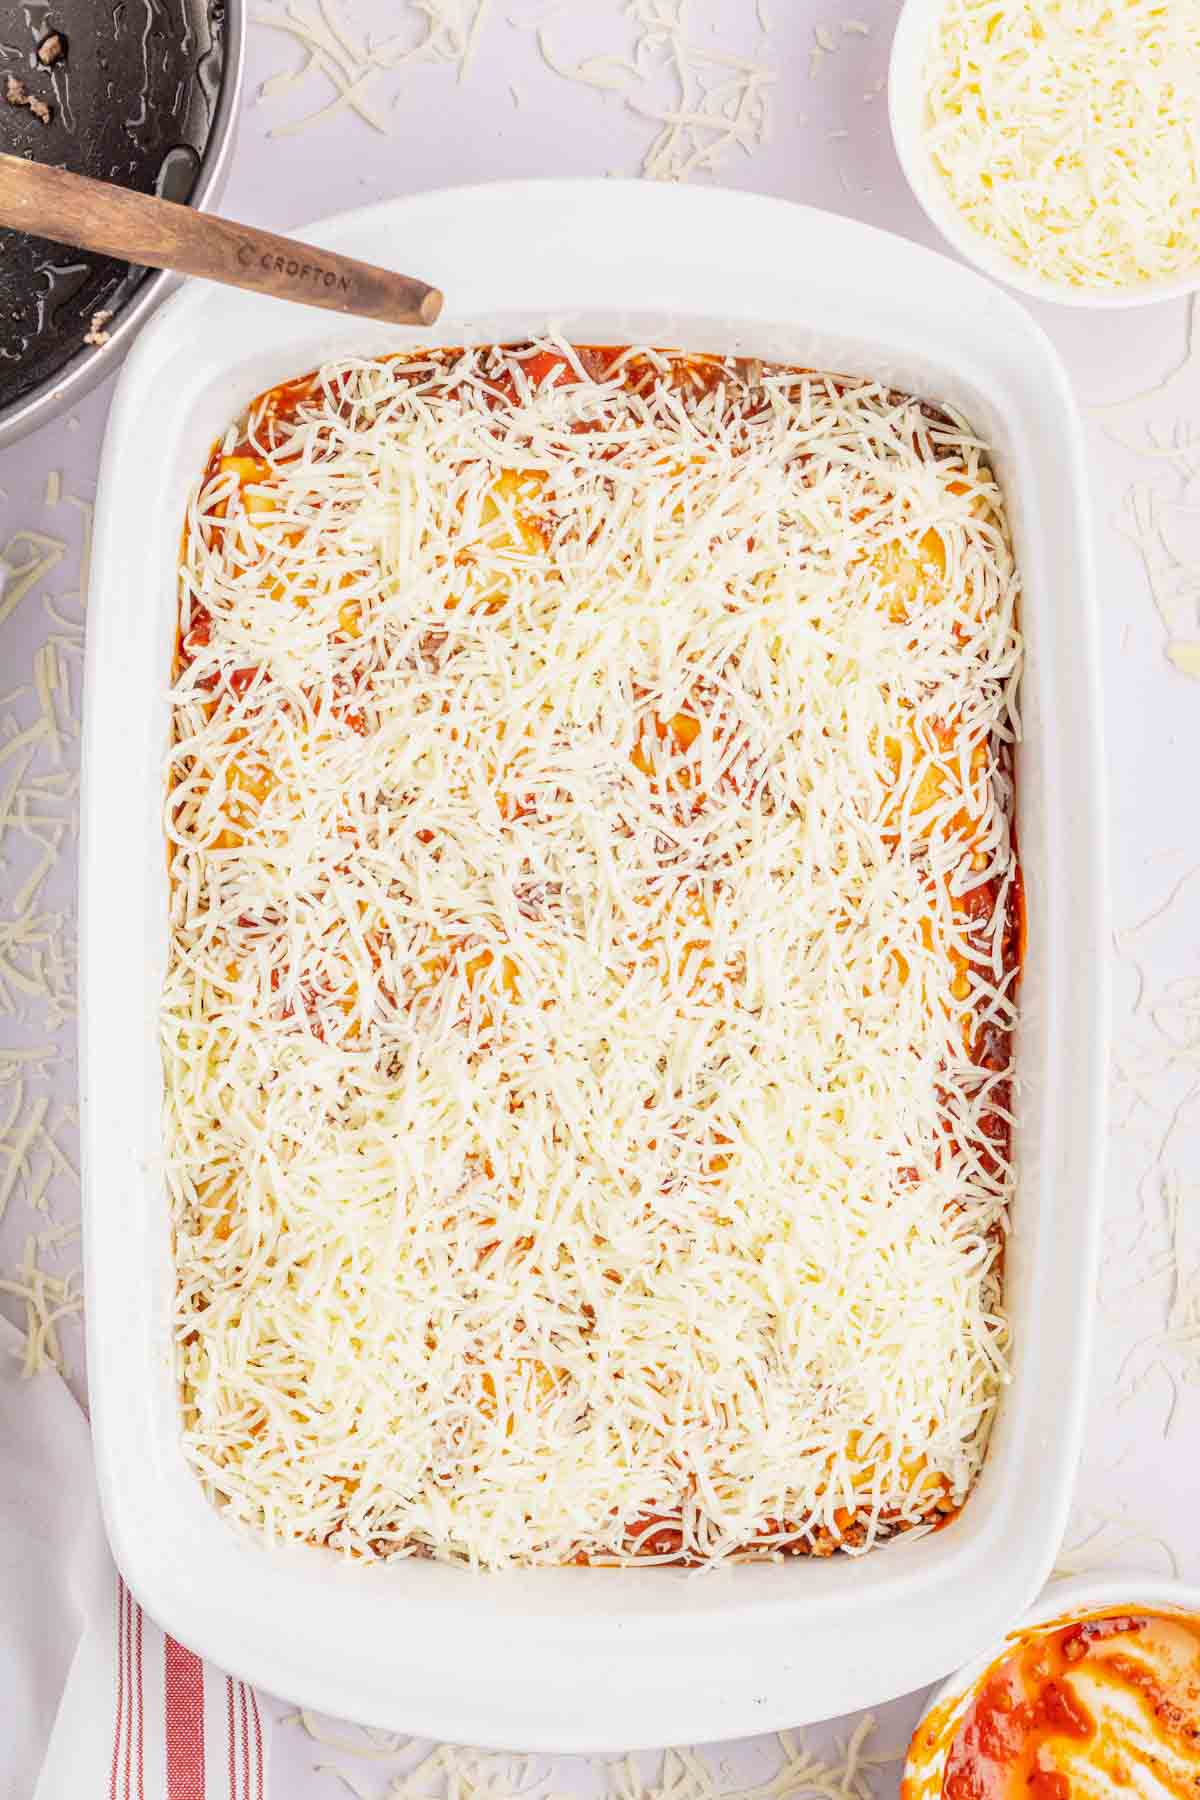 shredded mozzarella on top of ravioli casserole